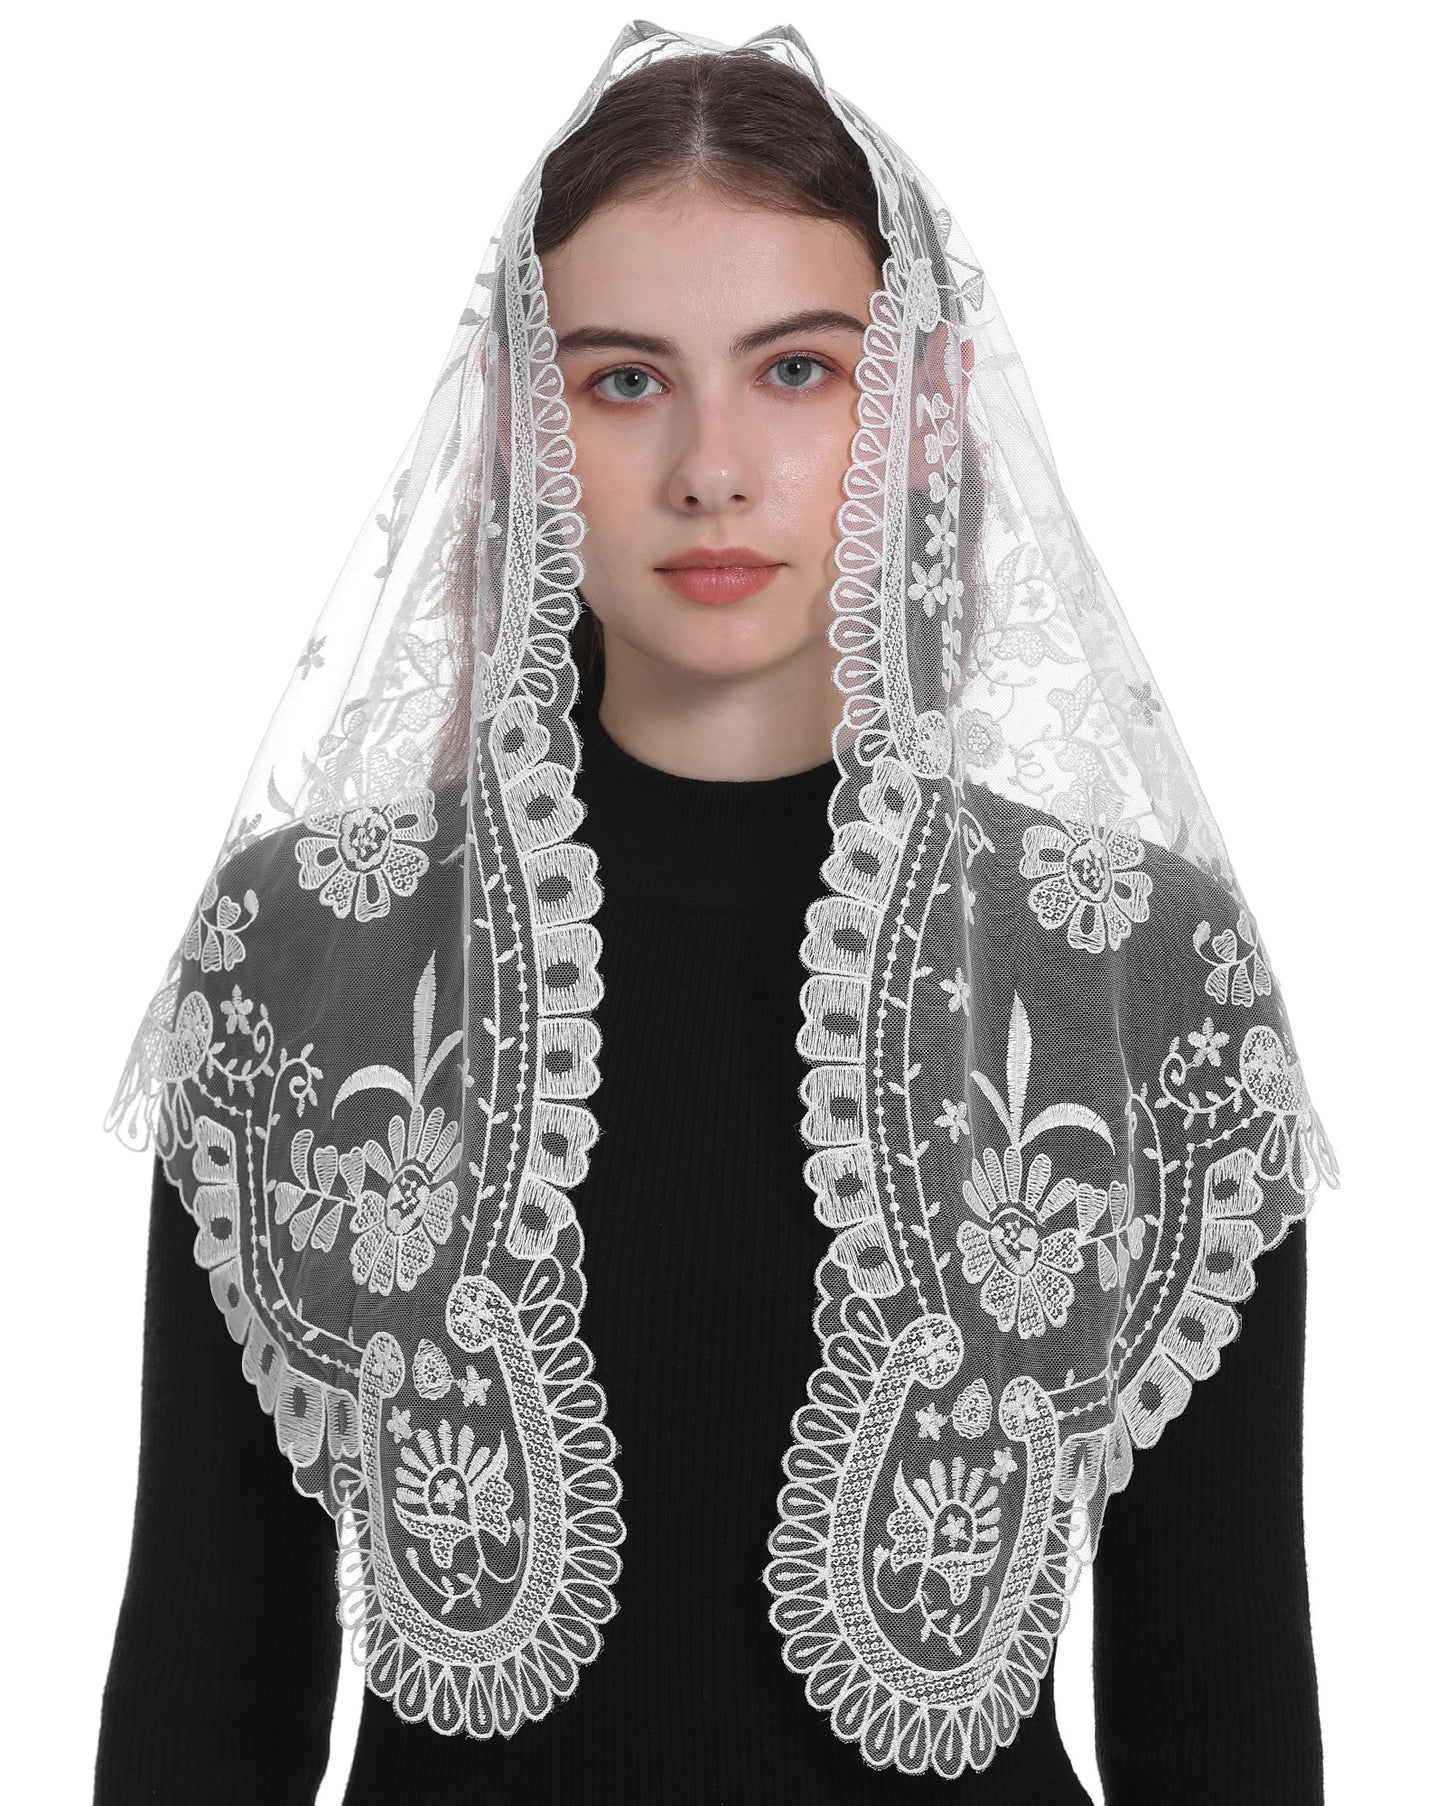 Bozidol Catholic Church Veil for Women Religious Chapel Embroidery Lace Scarf Spanish Christian Mass Funeral Veil